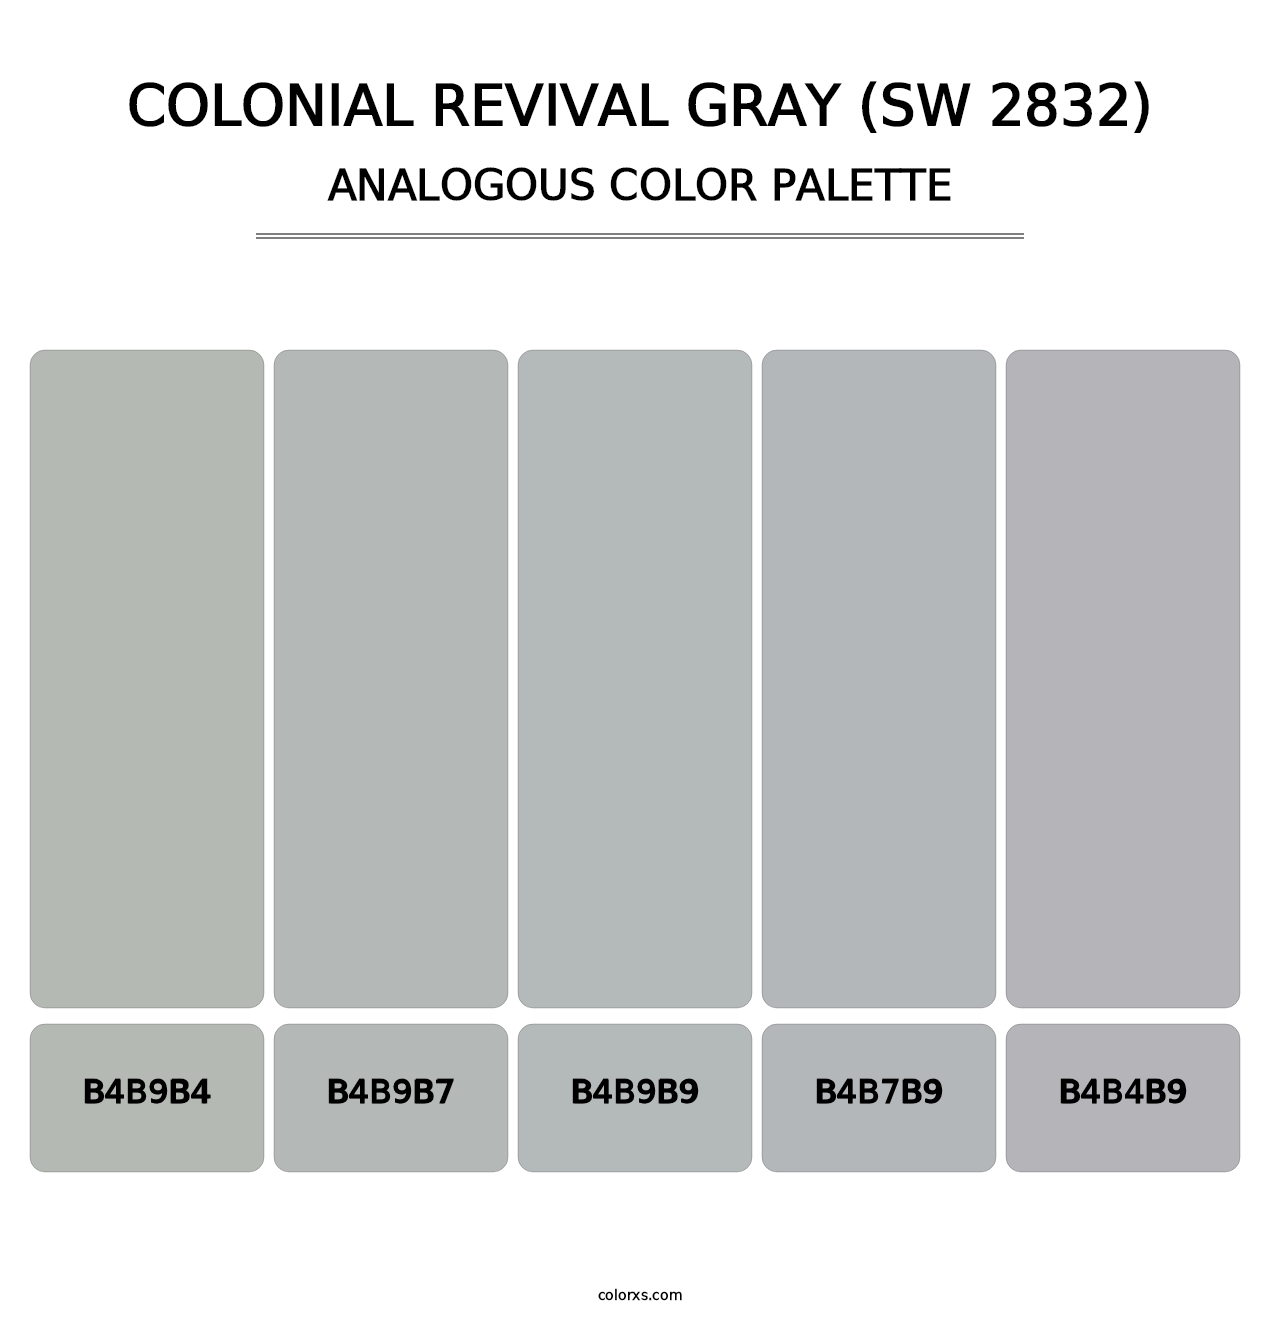 Colonial Revival Gray (SW 2832) - Analogous Color Palette